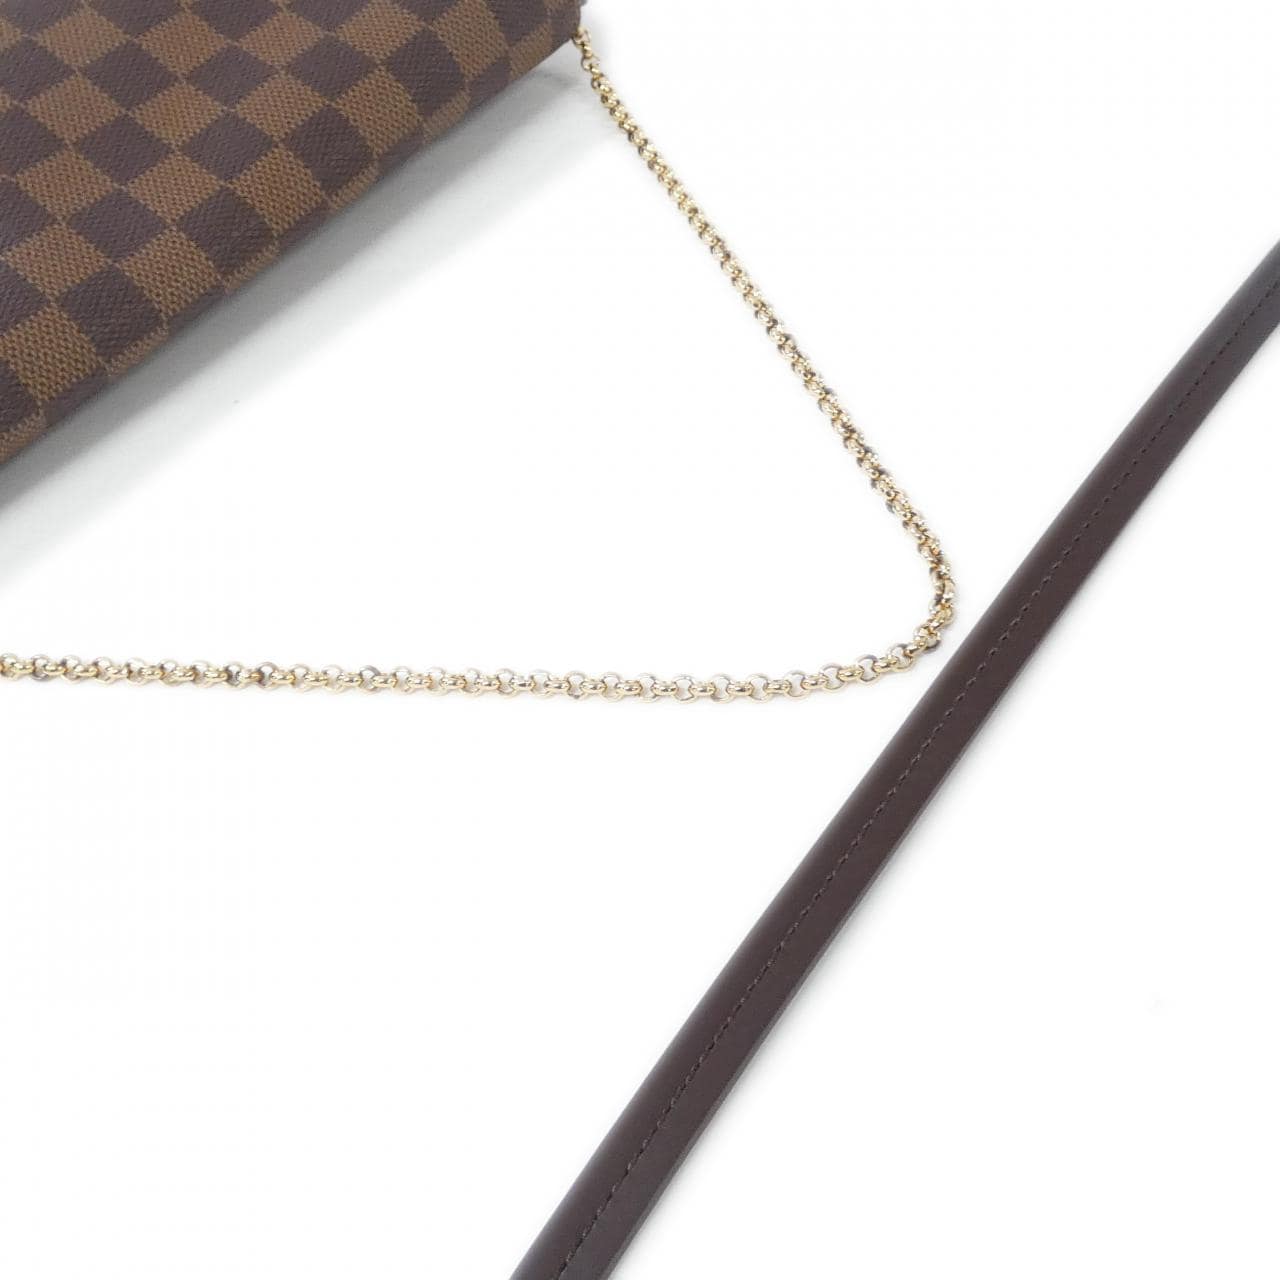 Buy Online Louis Vuitton-DAMIER FAVORITE MM-N41129 at Affordable Price